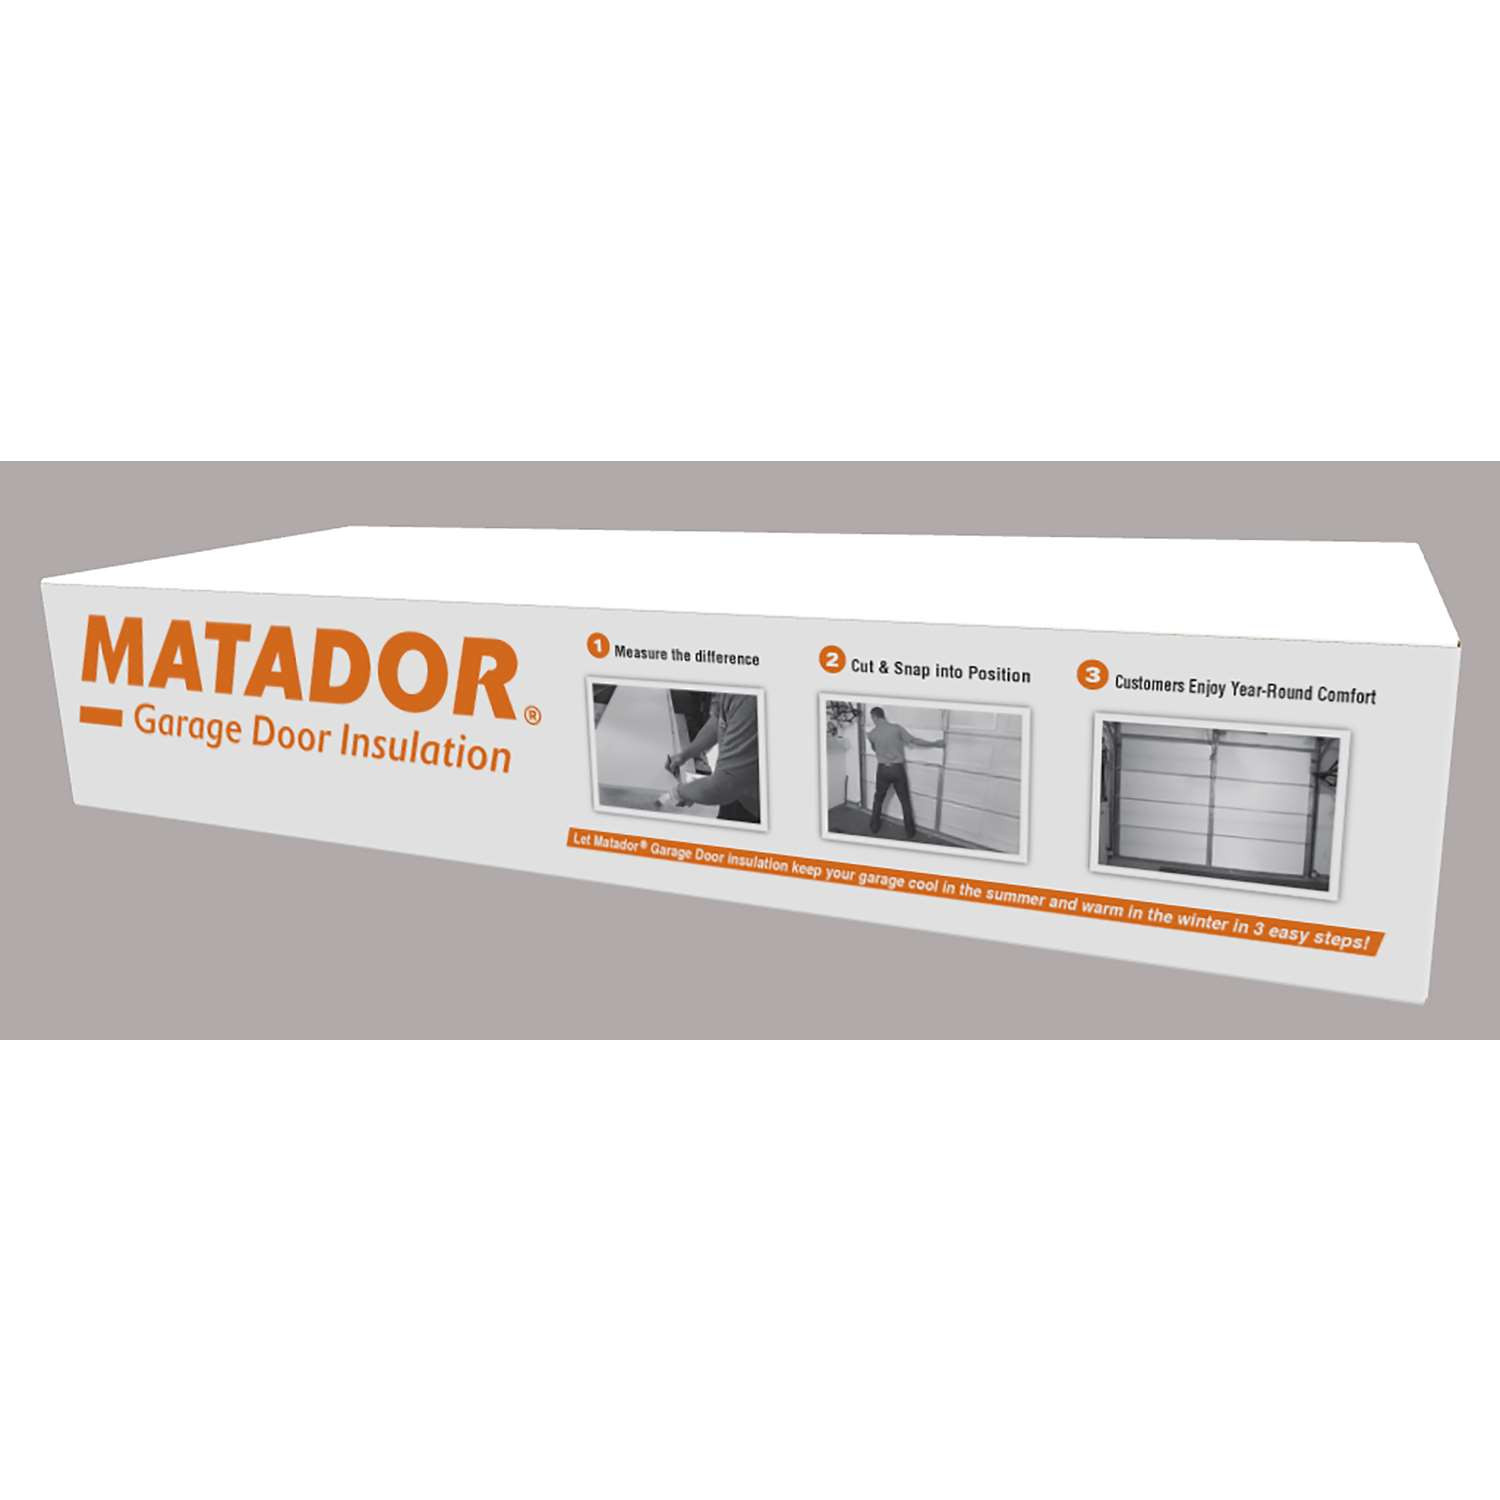 Matador Garage Door Insulation Kit
 Matador 21 in W x 55 in L 4 8 Garage Door Insulation Kit